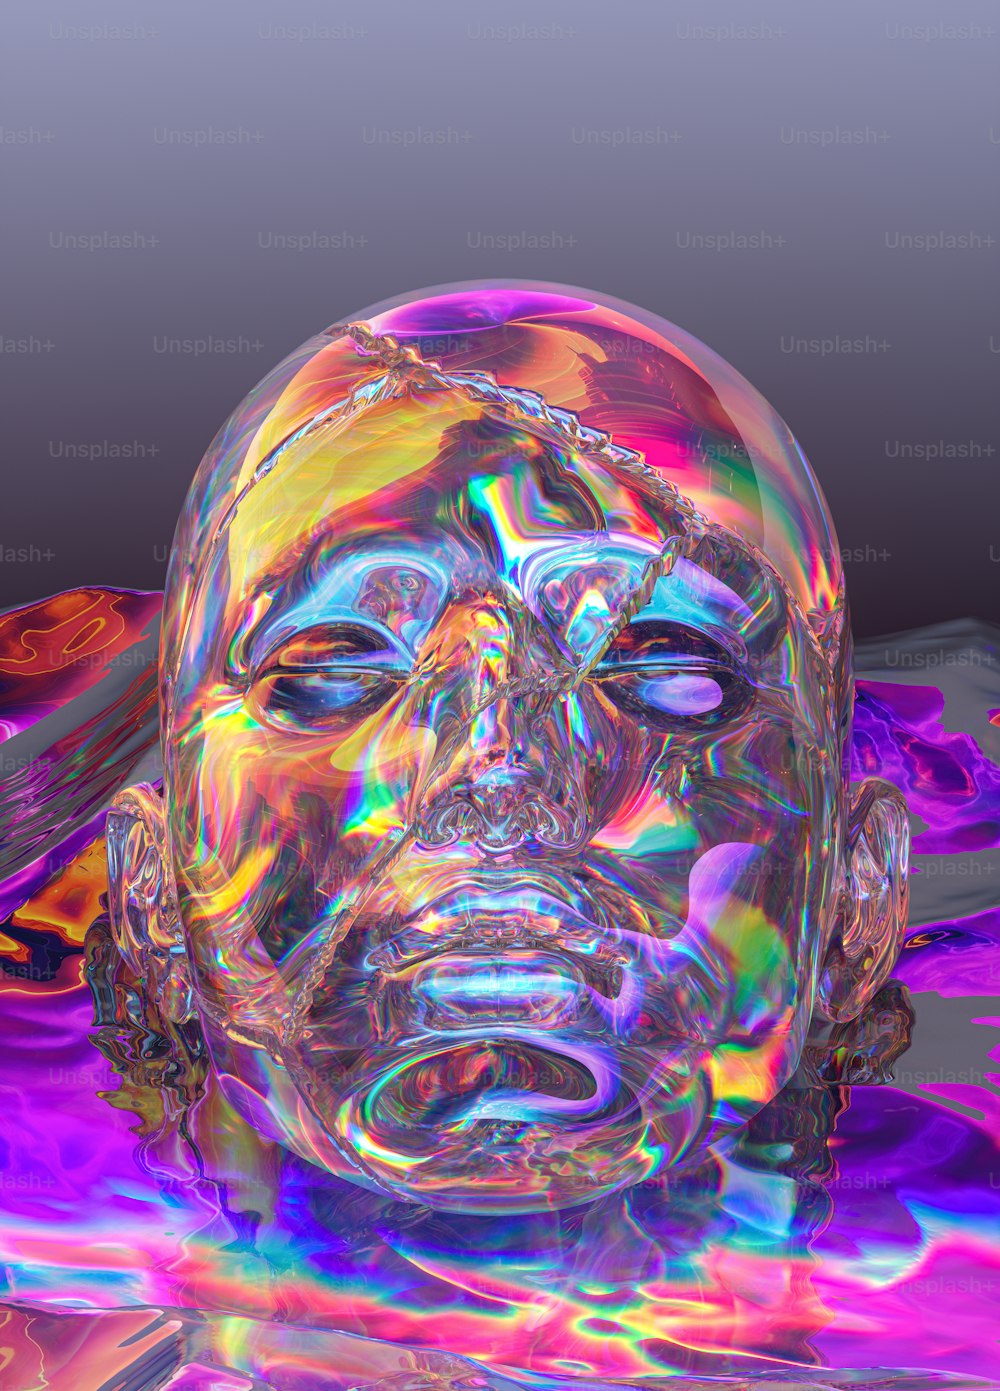 a multicolored image of a person's face